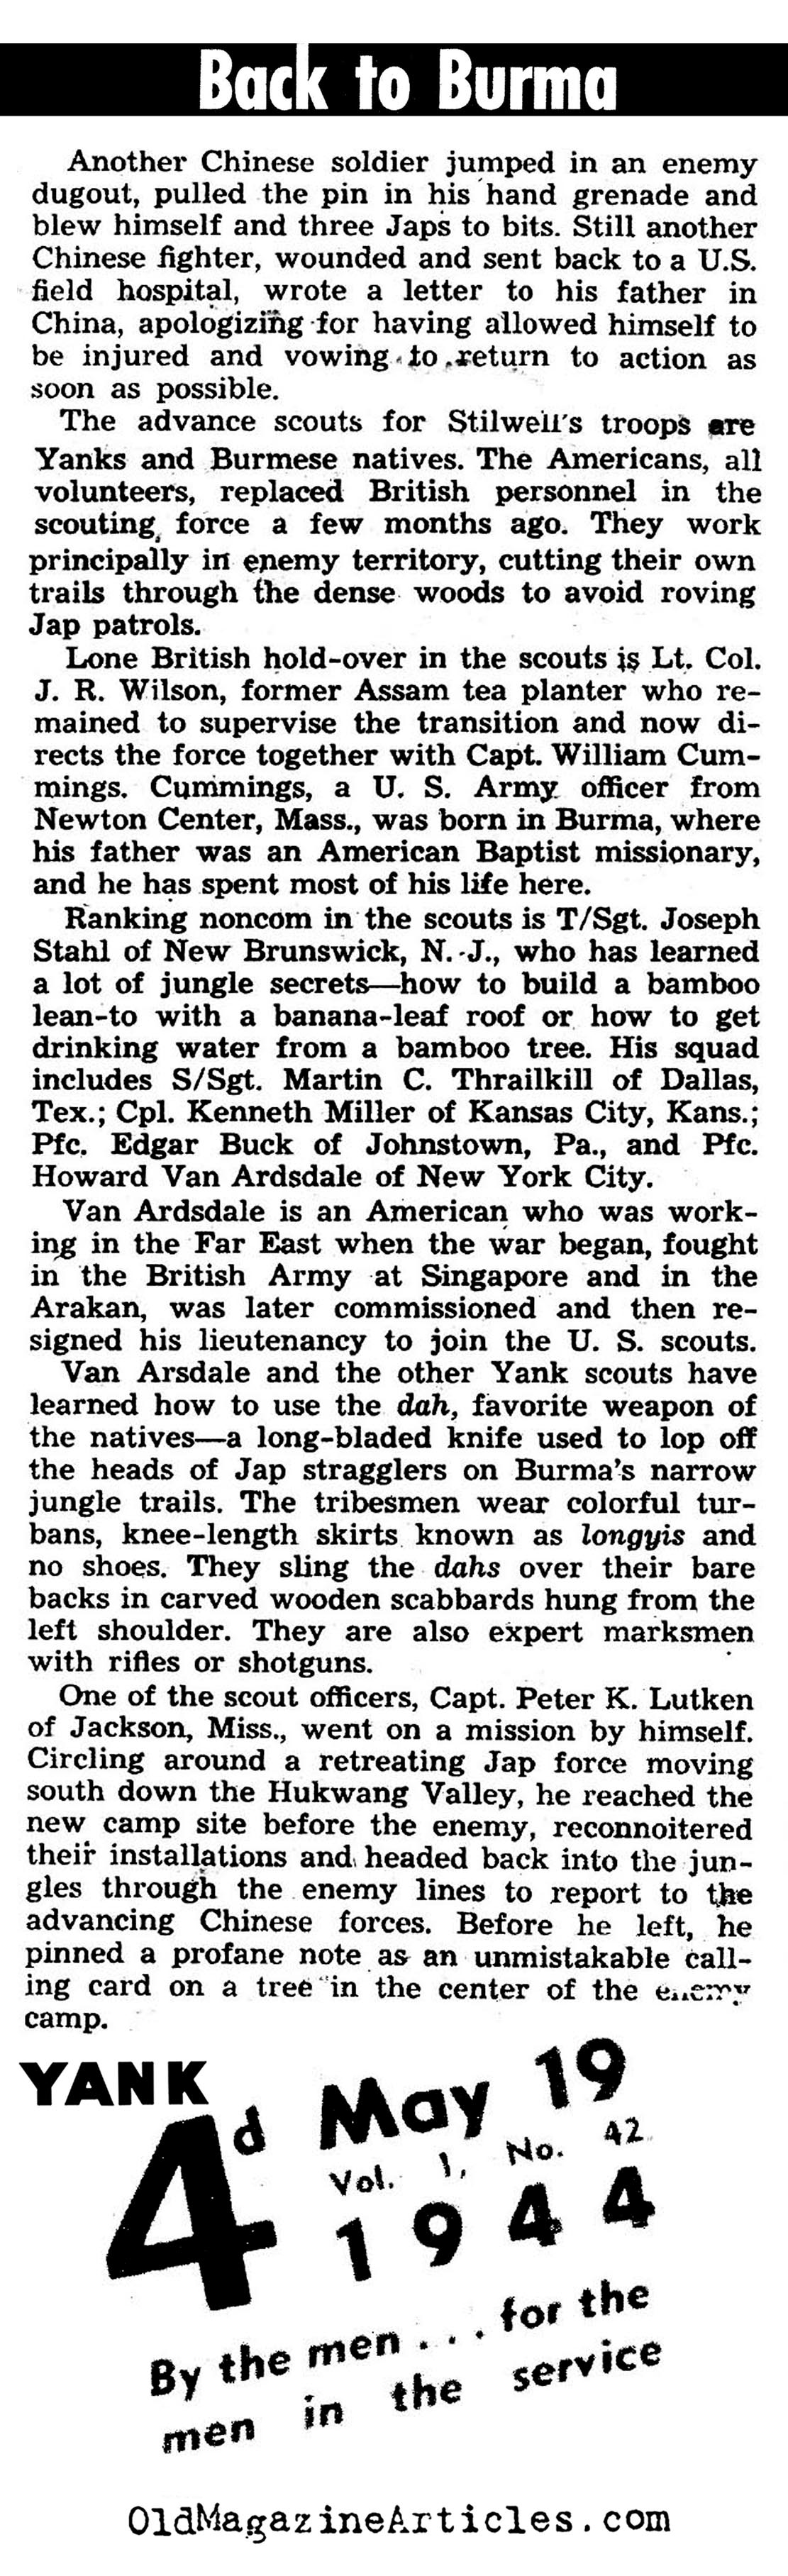 General Stilwell In Burma (Yank Magazine, 1944)